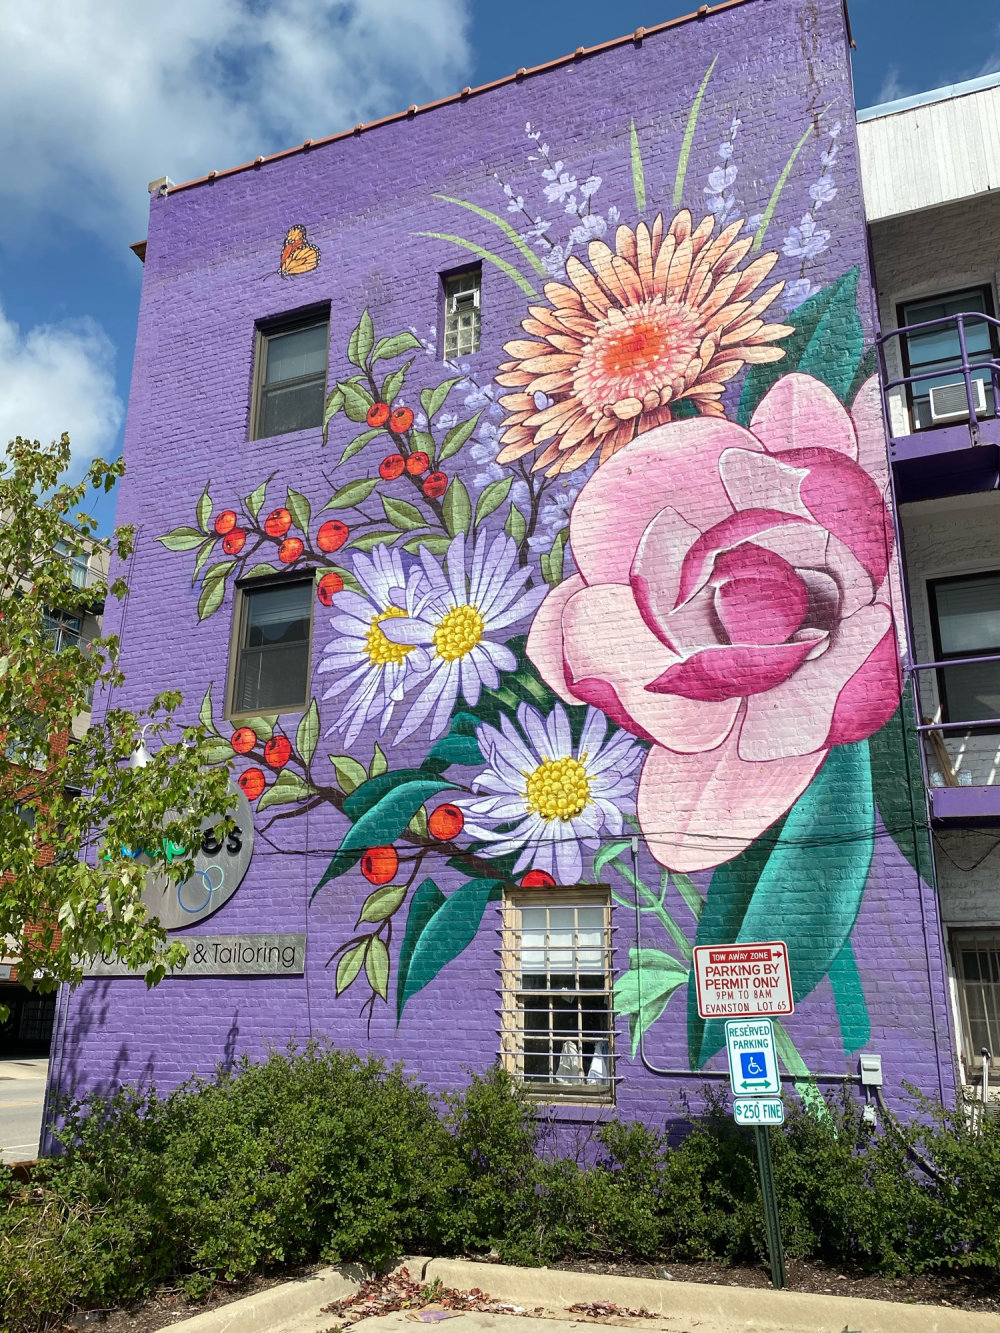 mural in Evanston by artist Ouizi.